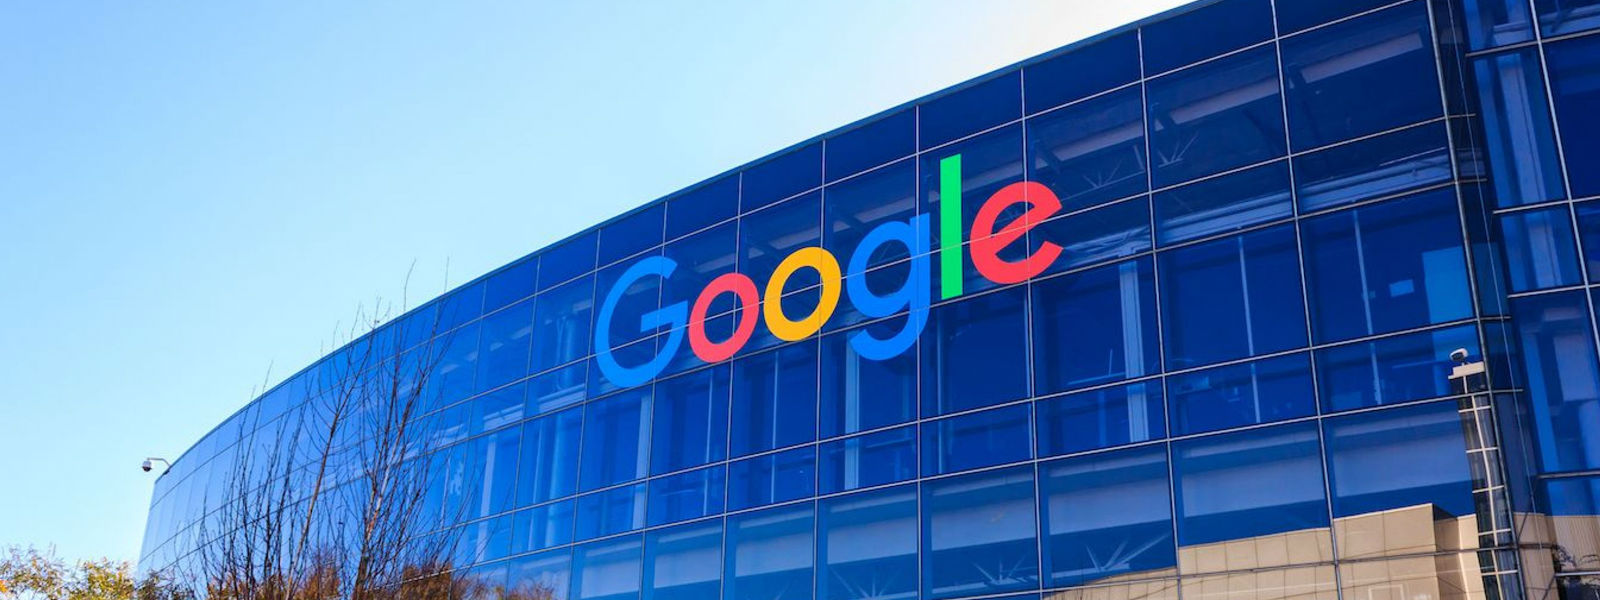 Google நிறுவனம் மீது அமெரிக்கா வழக்கு தாக்கல்